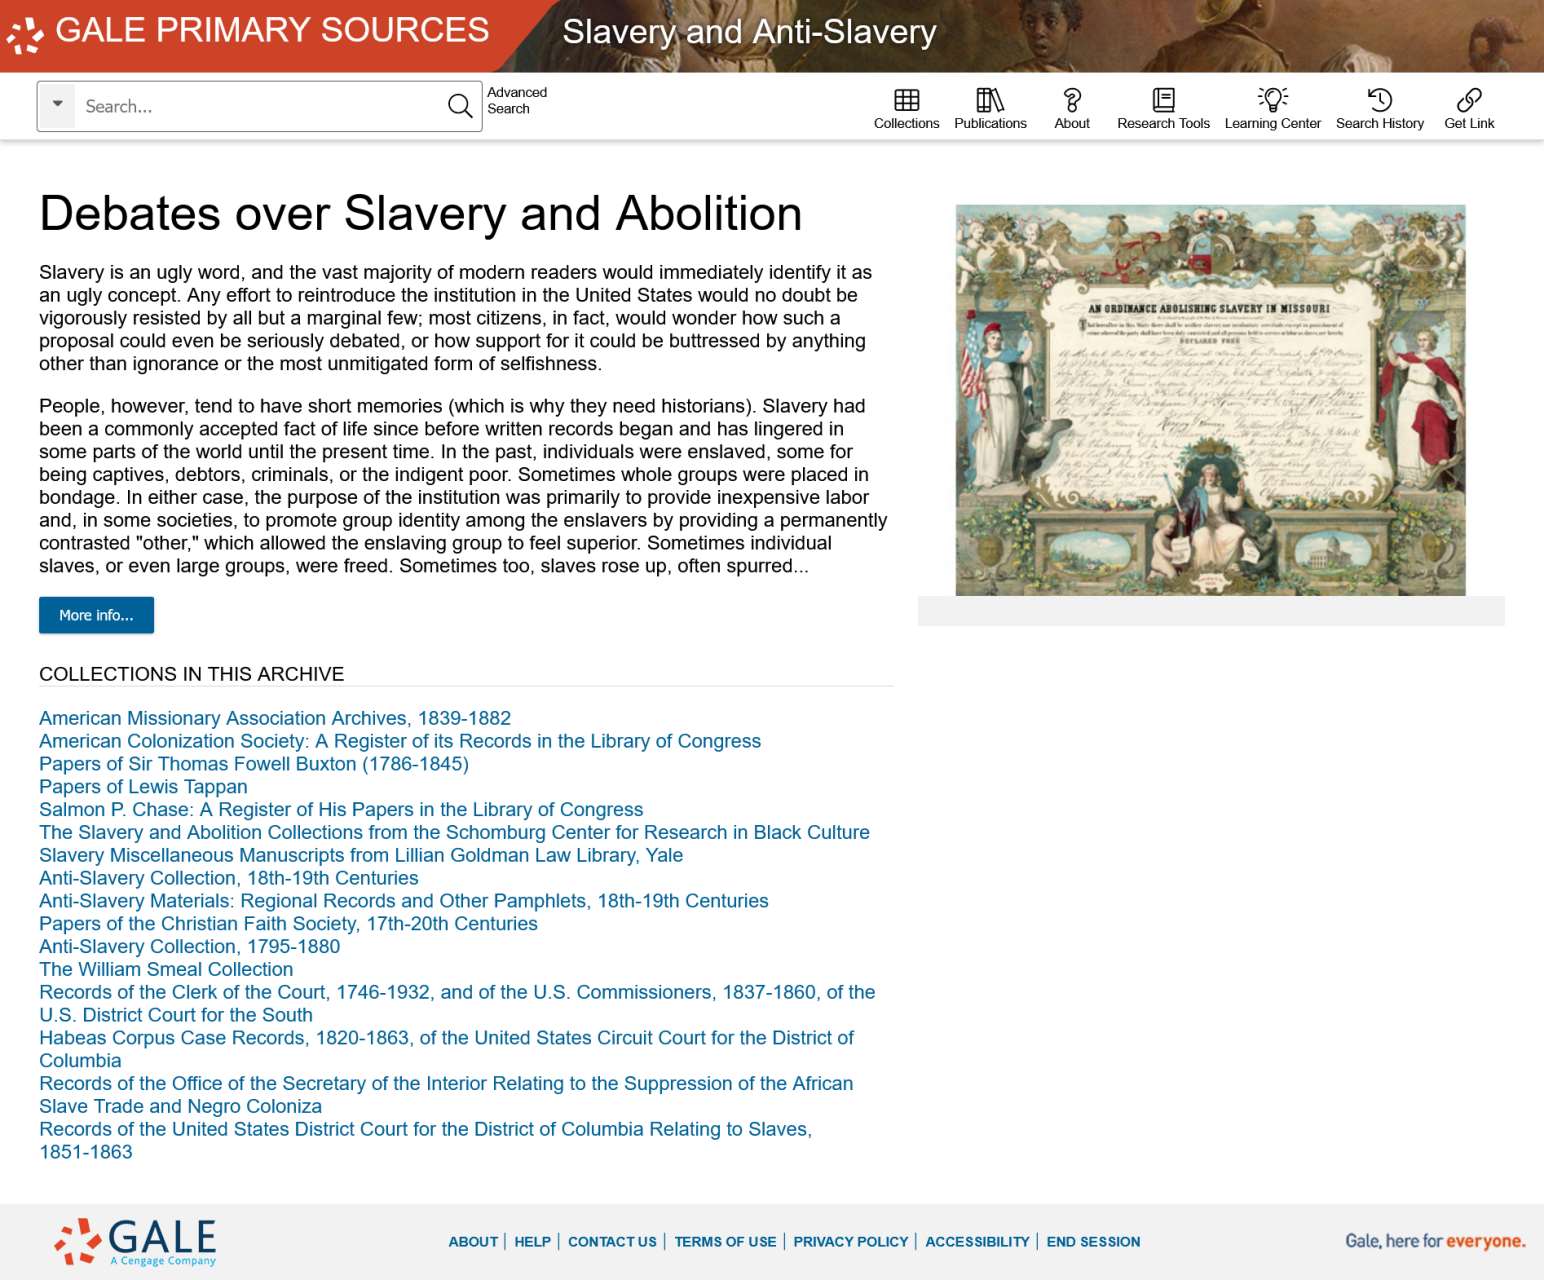 Slavery and Anti-Slavery: A Transnational Archive第１部の概要画面